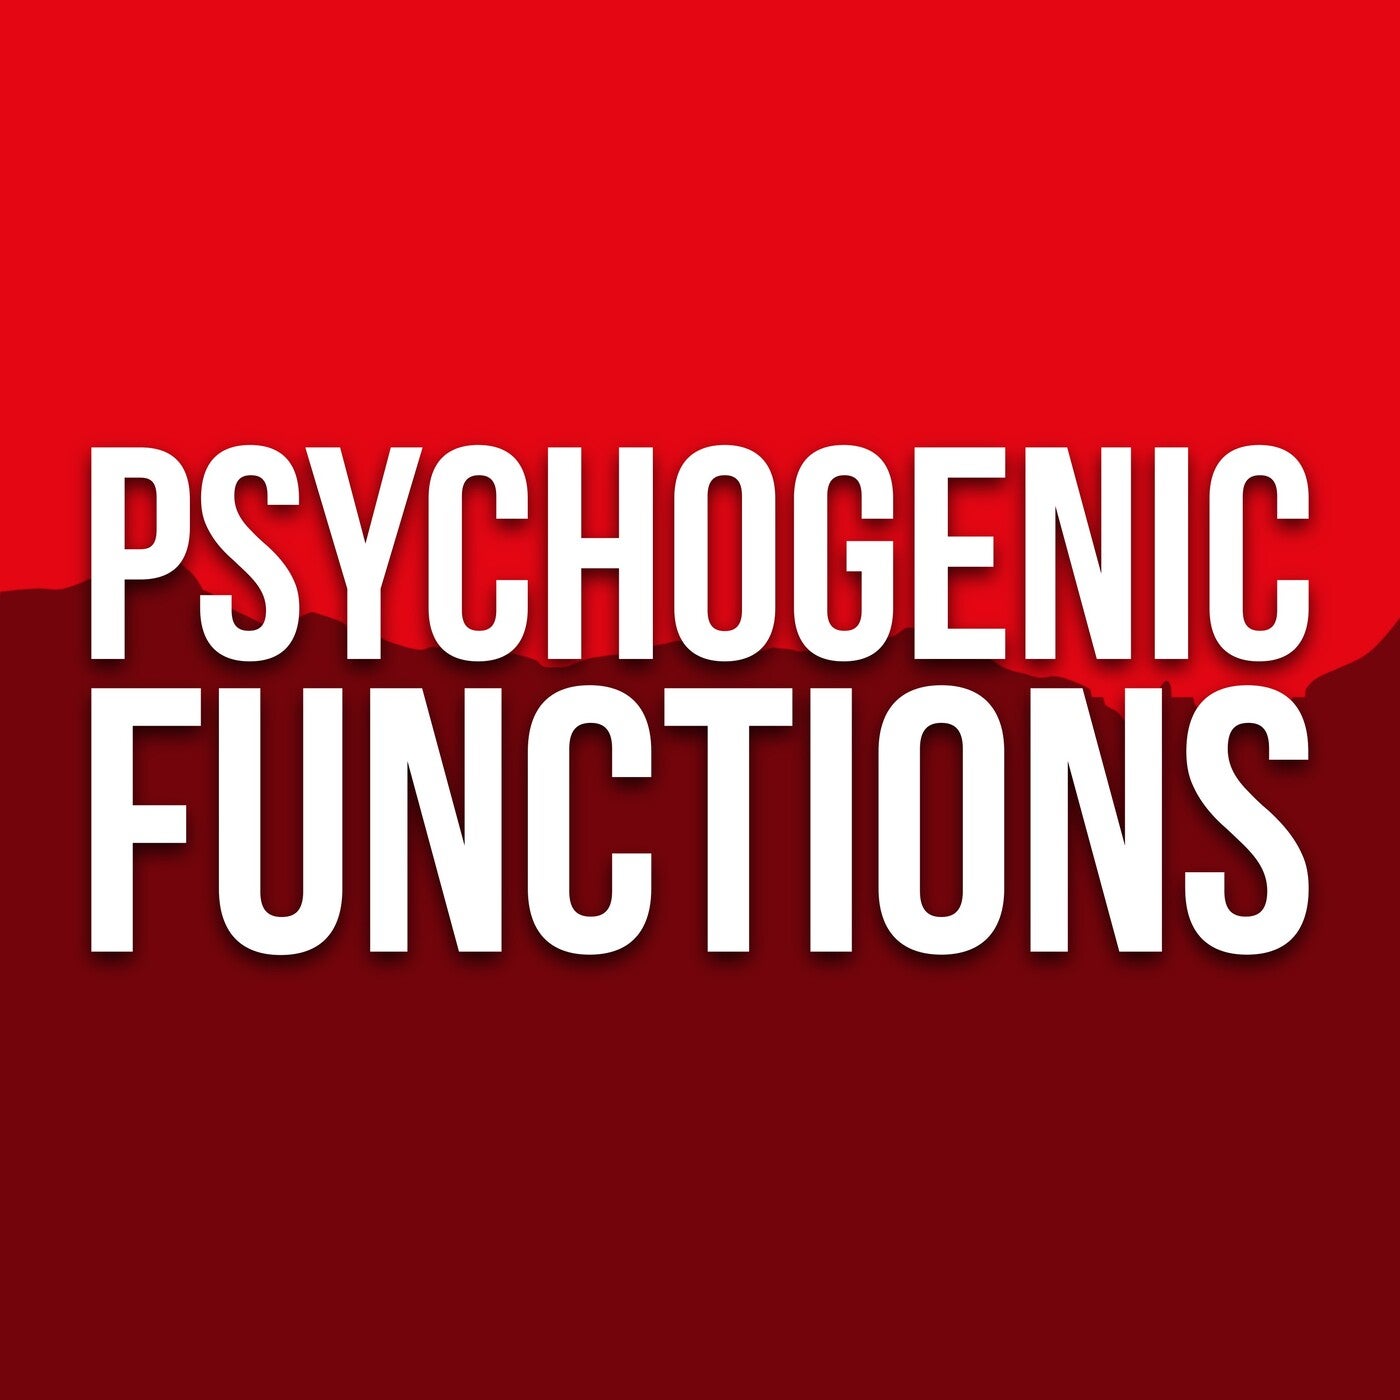 Psychogenic Functions